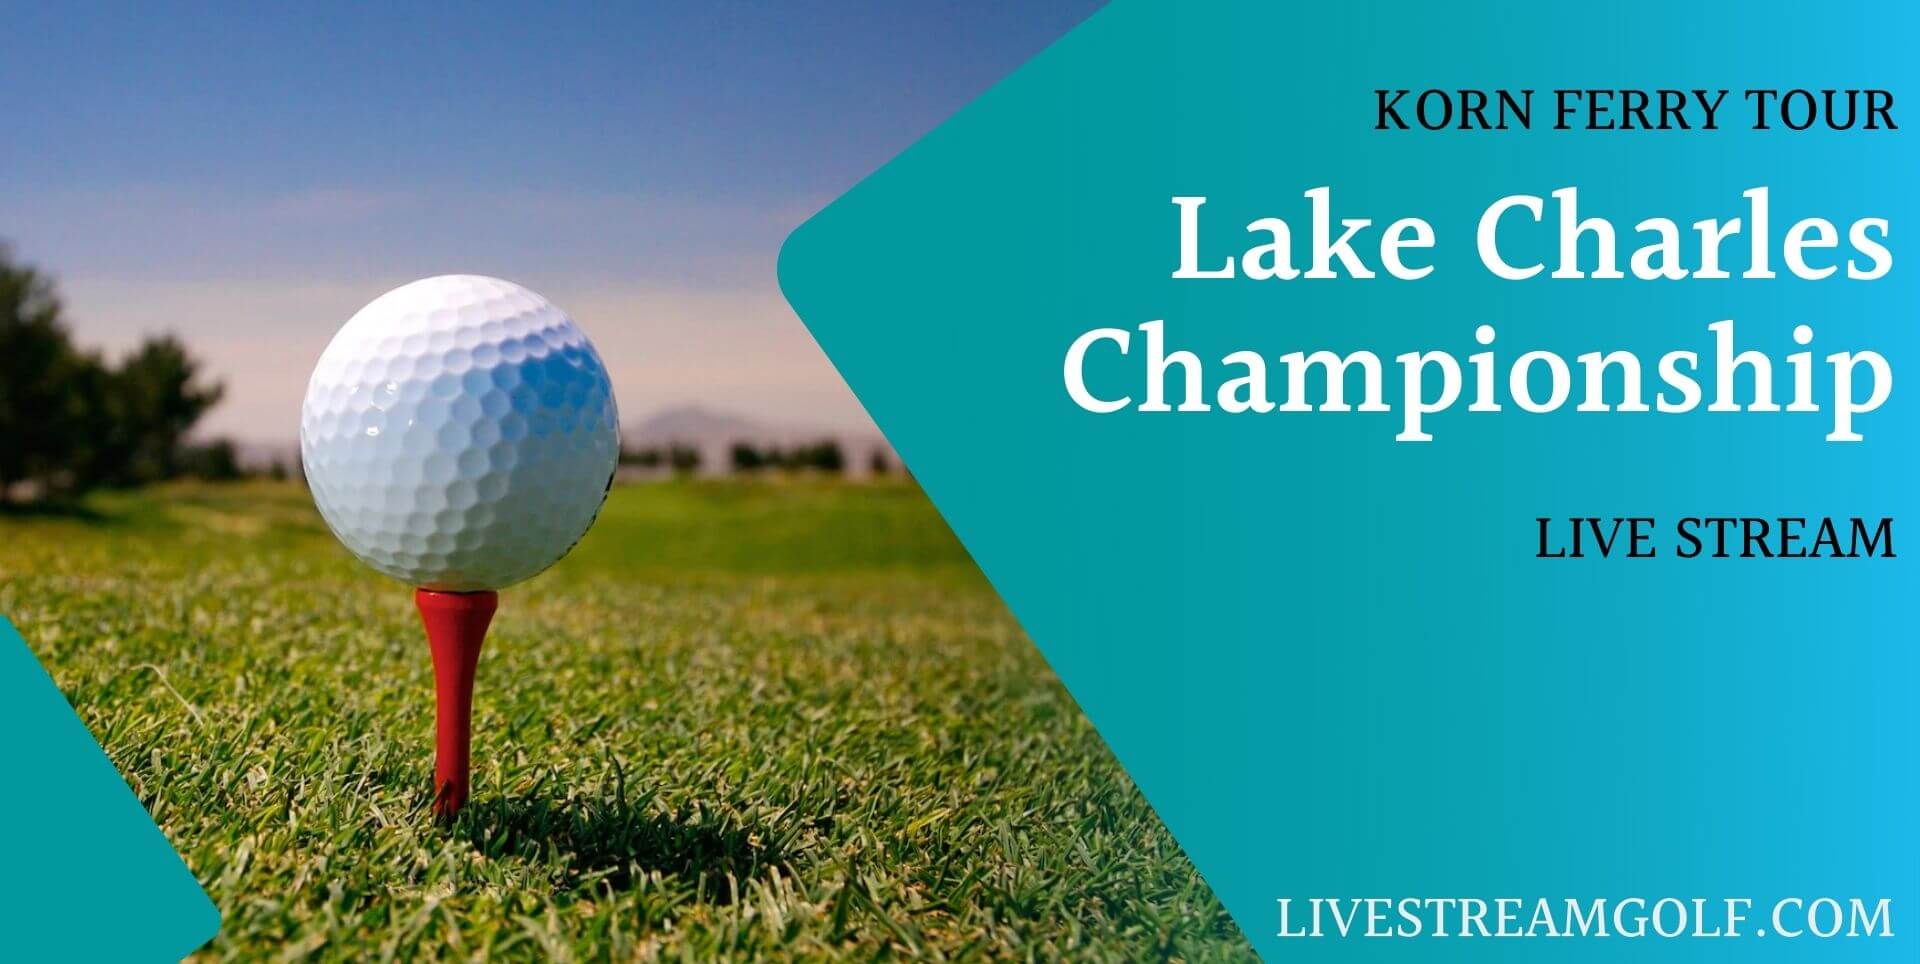 lake-charles-championship-live-stream-korn-ferry